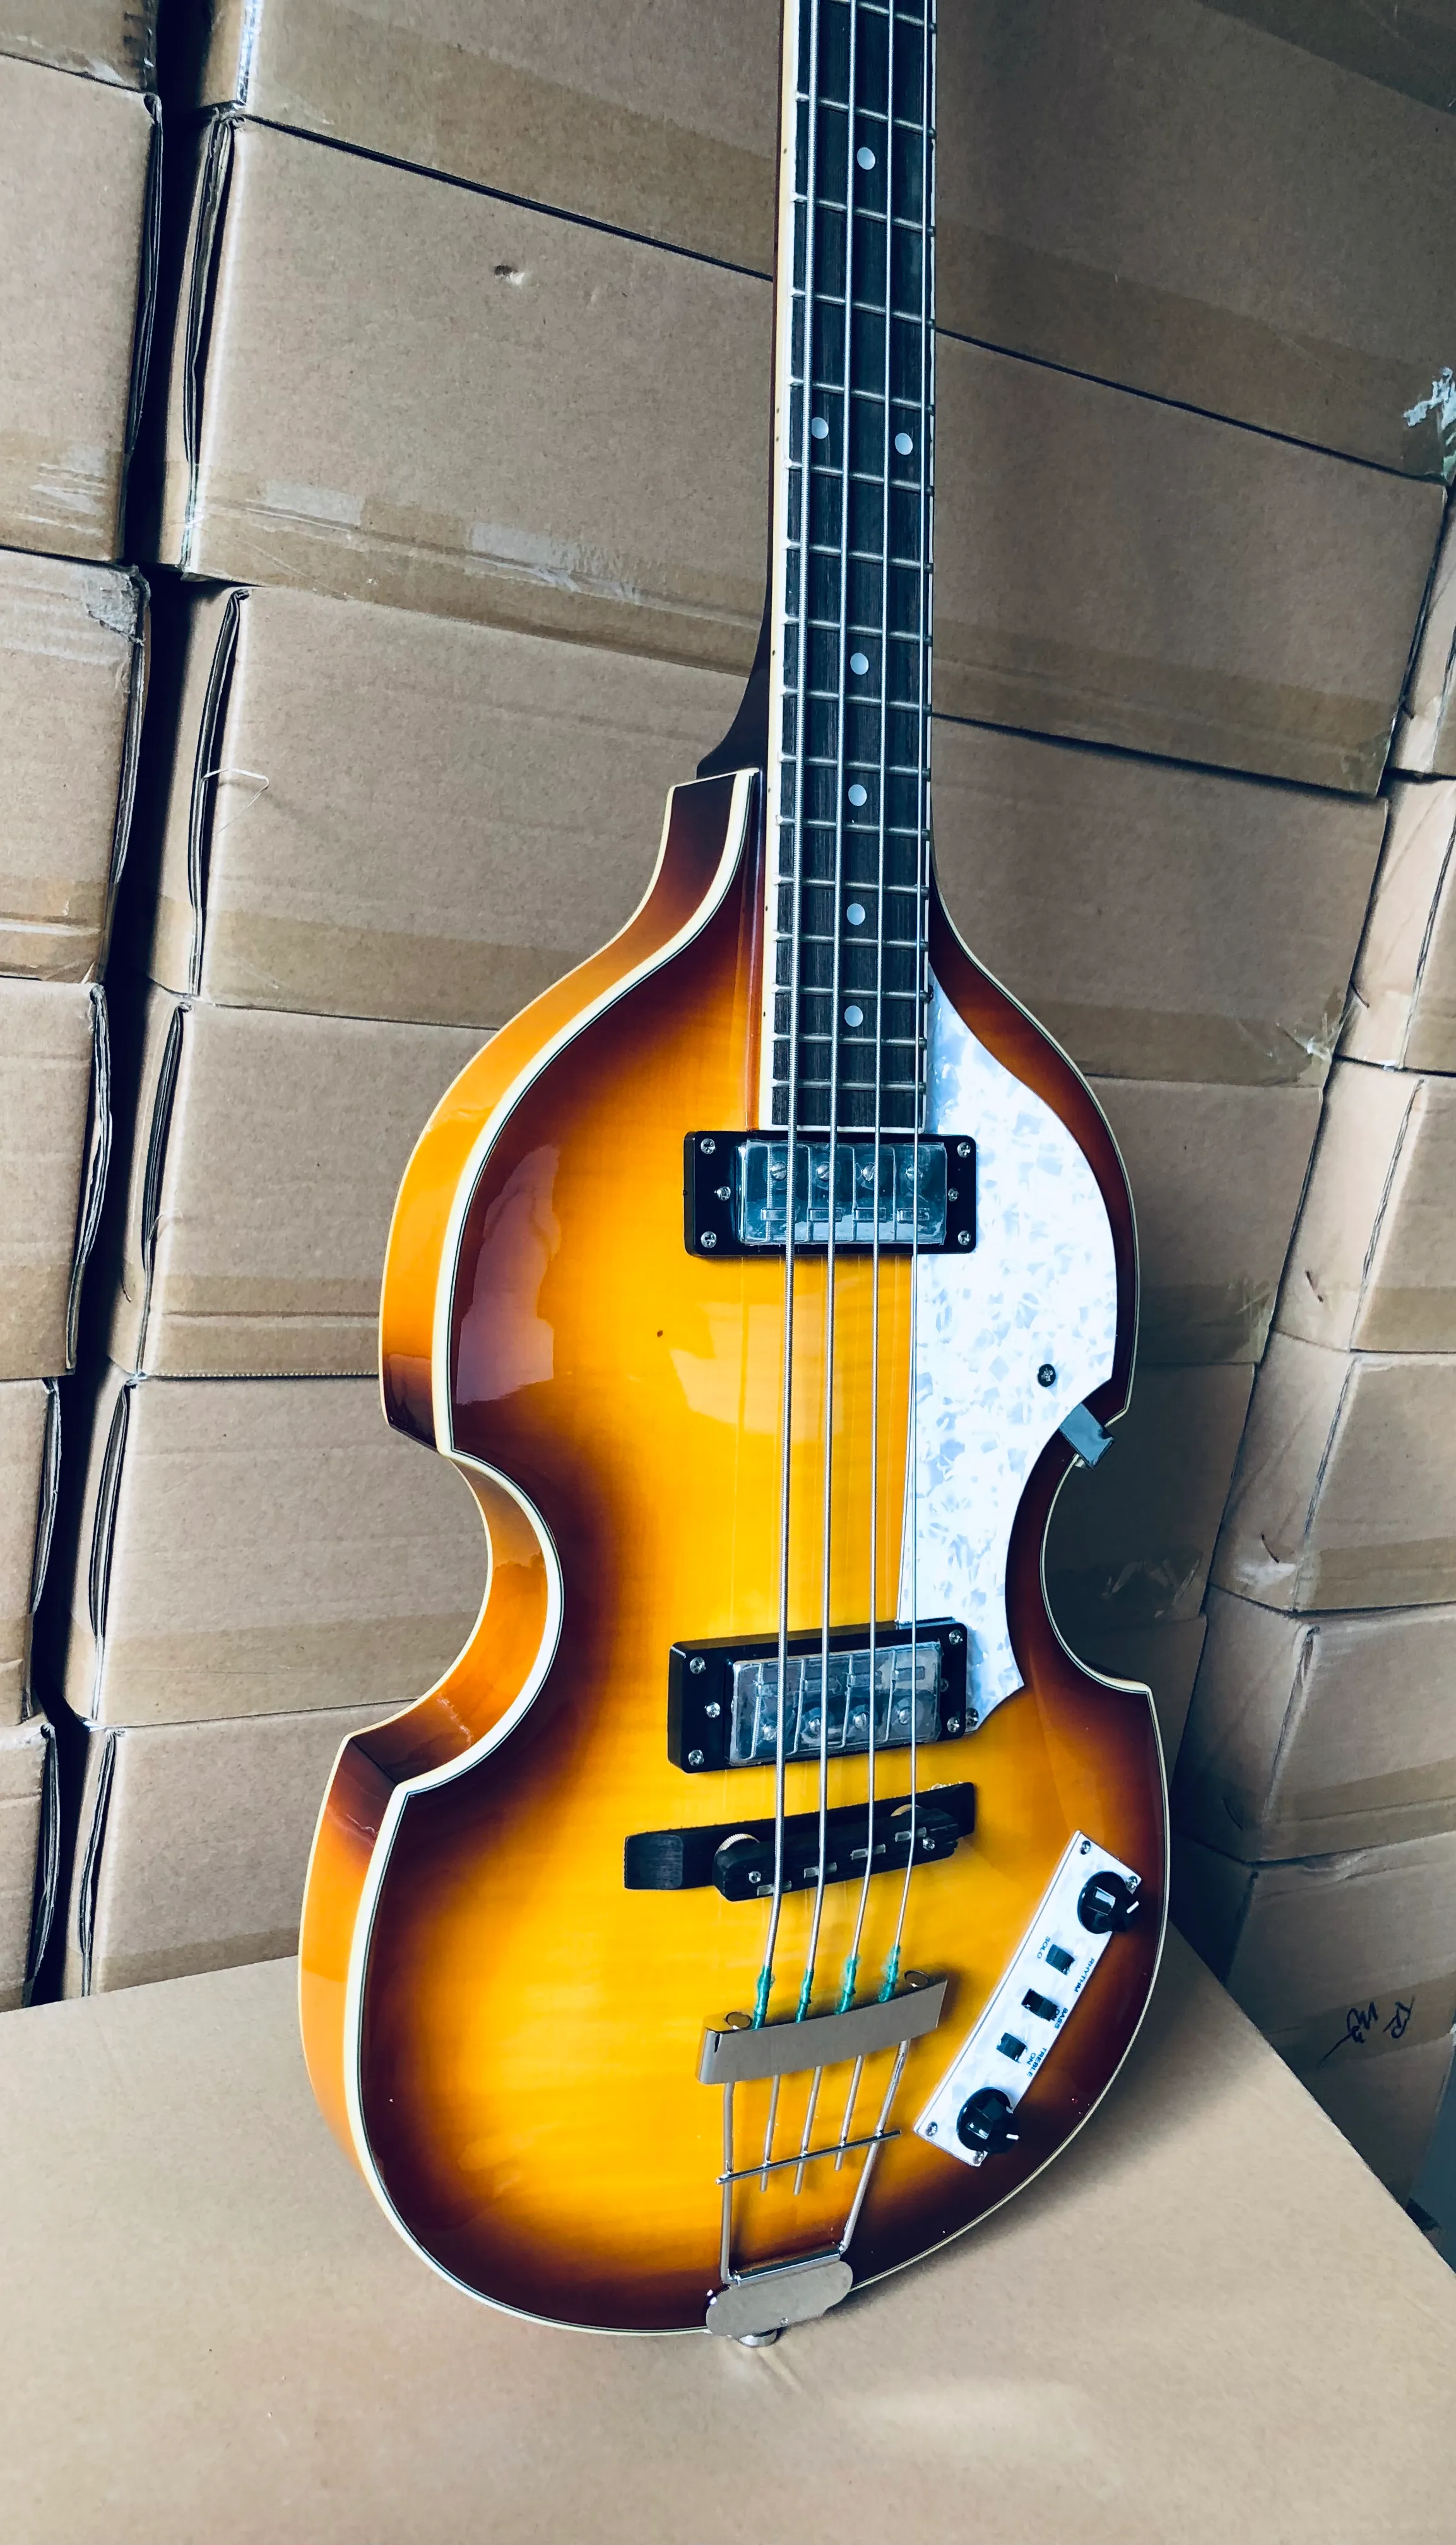 McCartney Hofnerデラックスサンバースト4文字列バイオリンベースエレクトリックギター炎メープルトップバック、2 511bステープルピックアップ、H500 / 1 CTコンテンポラリー、ホワイトチューナー、パールピックガード